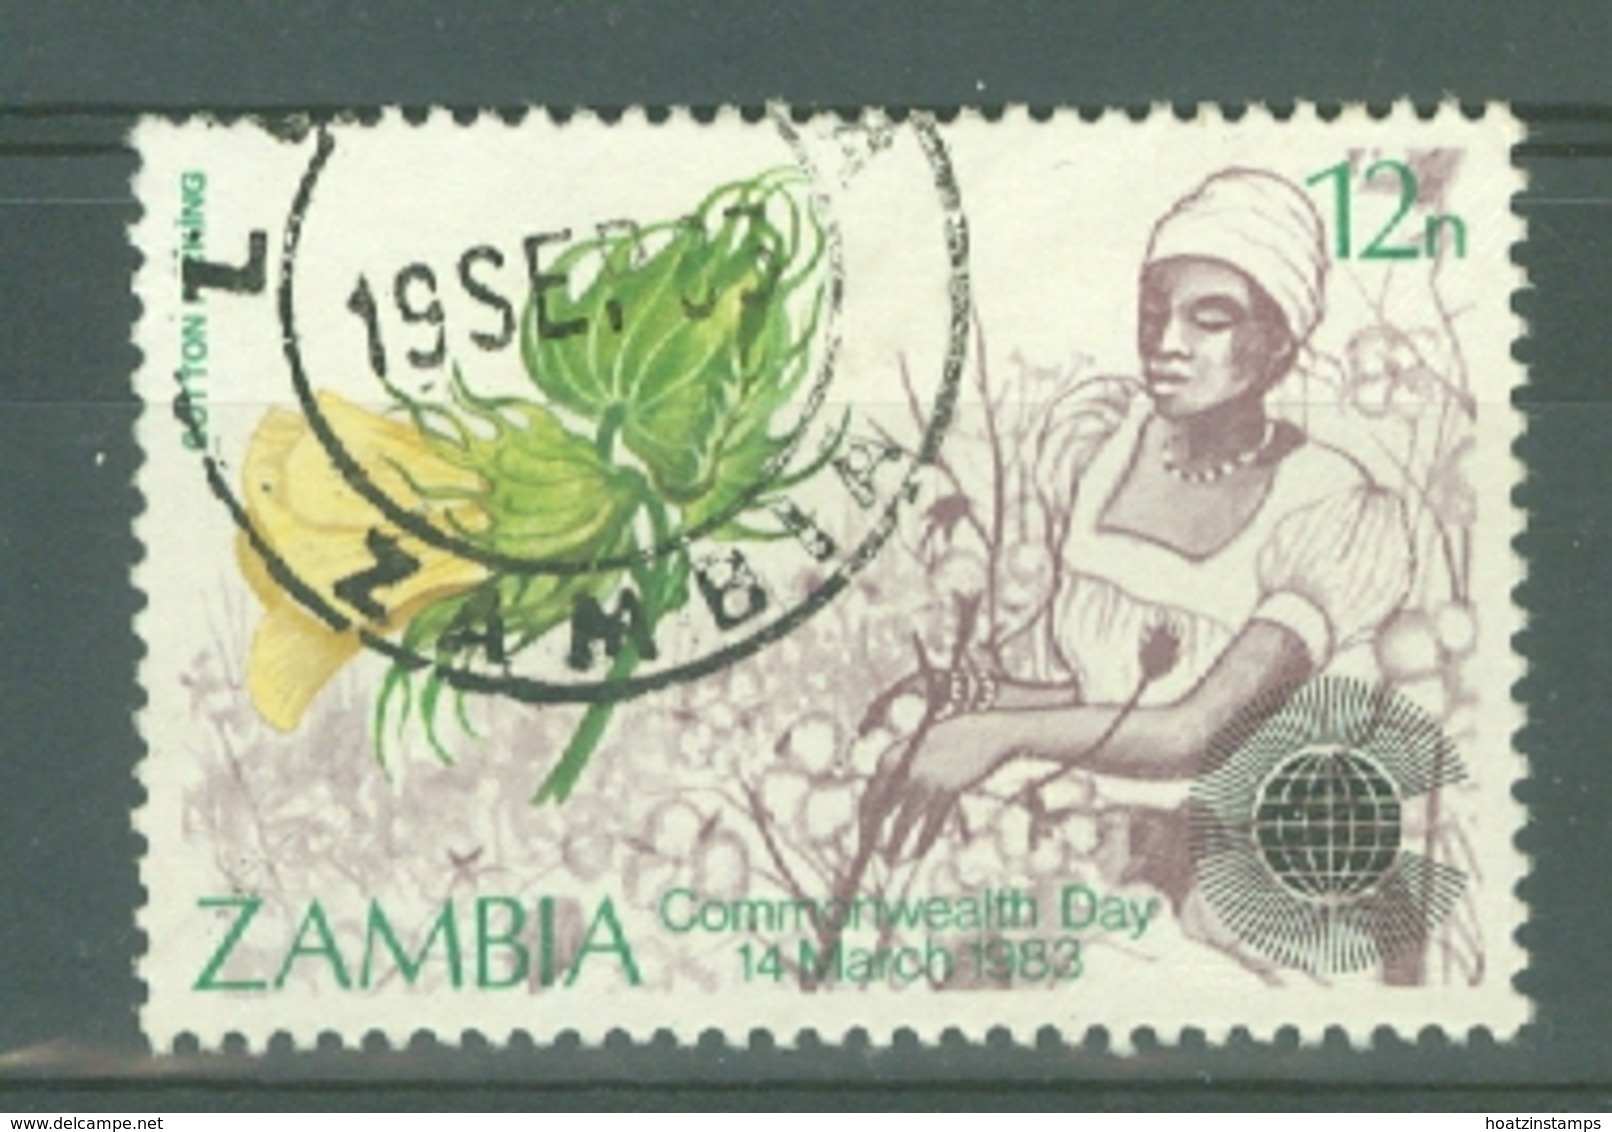 Zambia: 1983   Commonwealth Day   SG379   12n     Used - Zambia (1965-...)